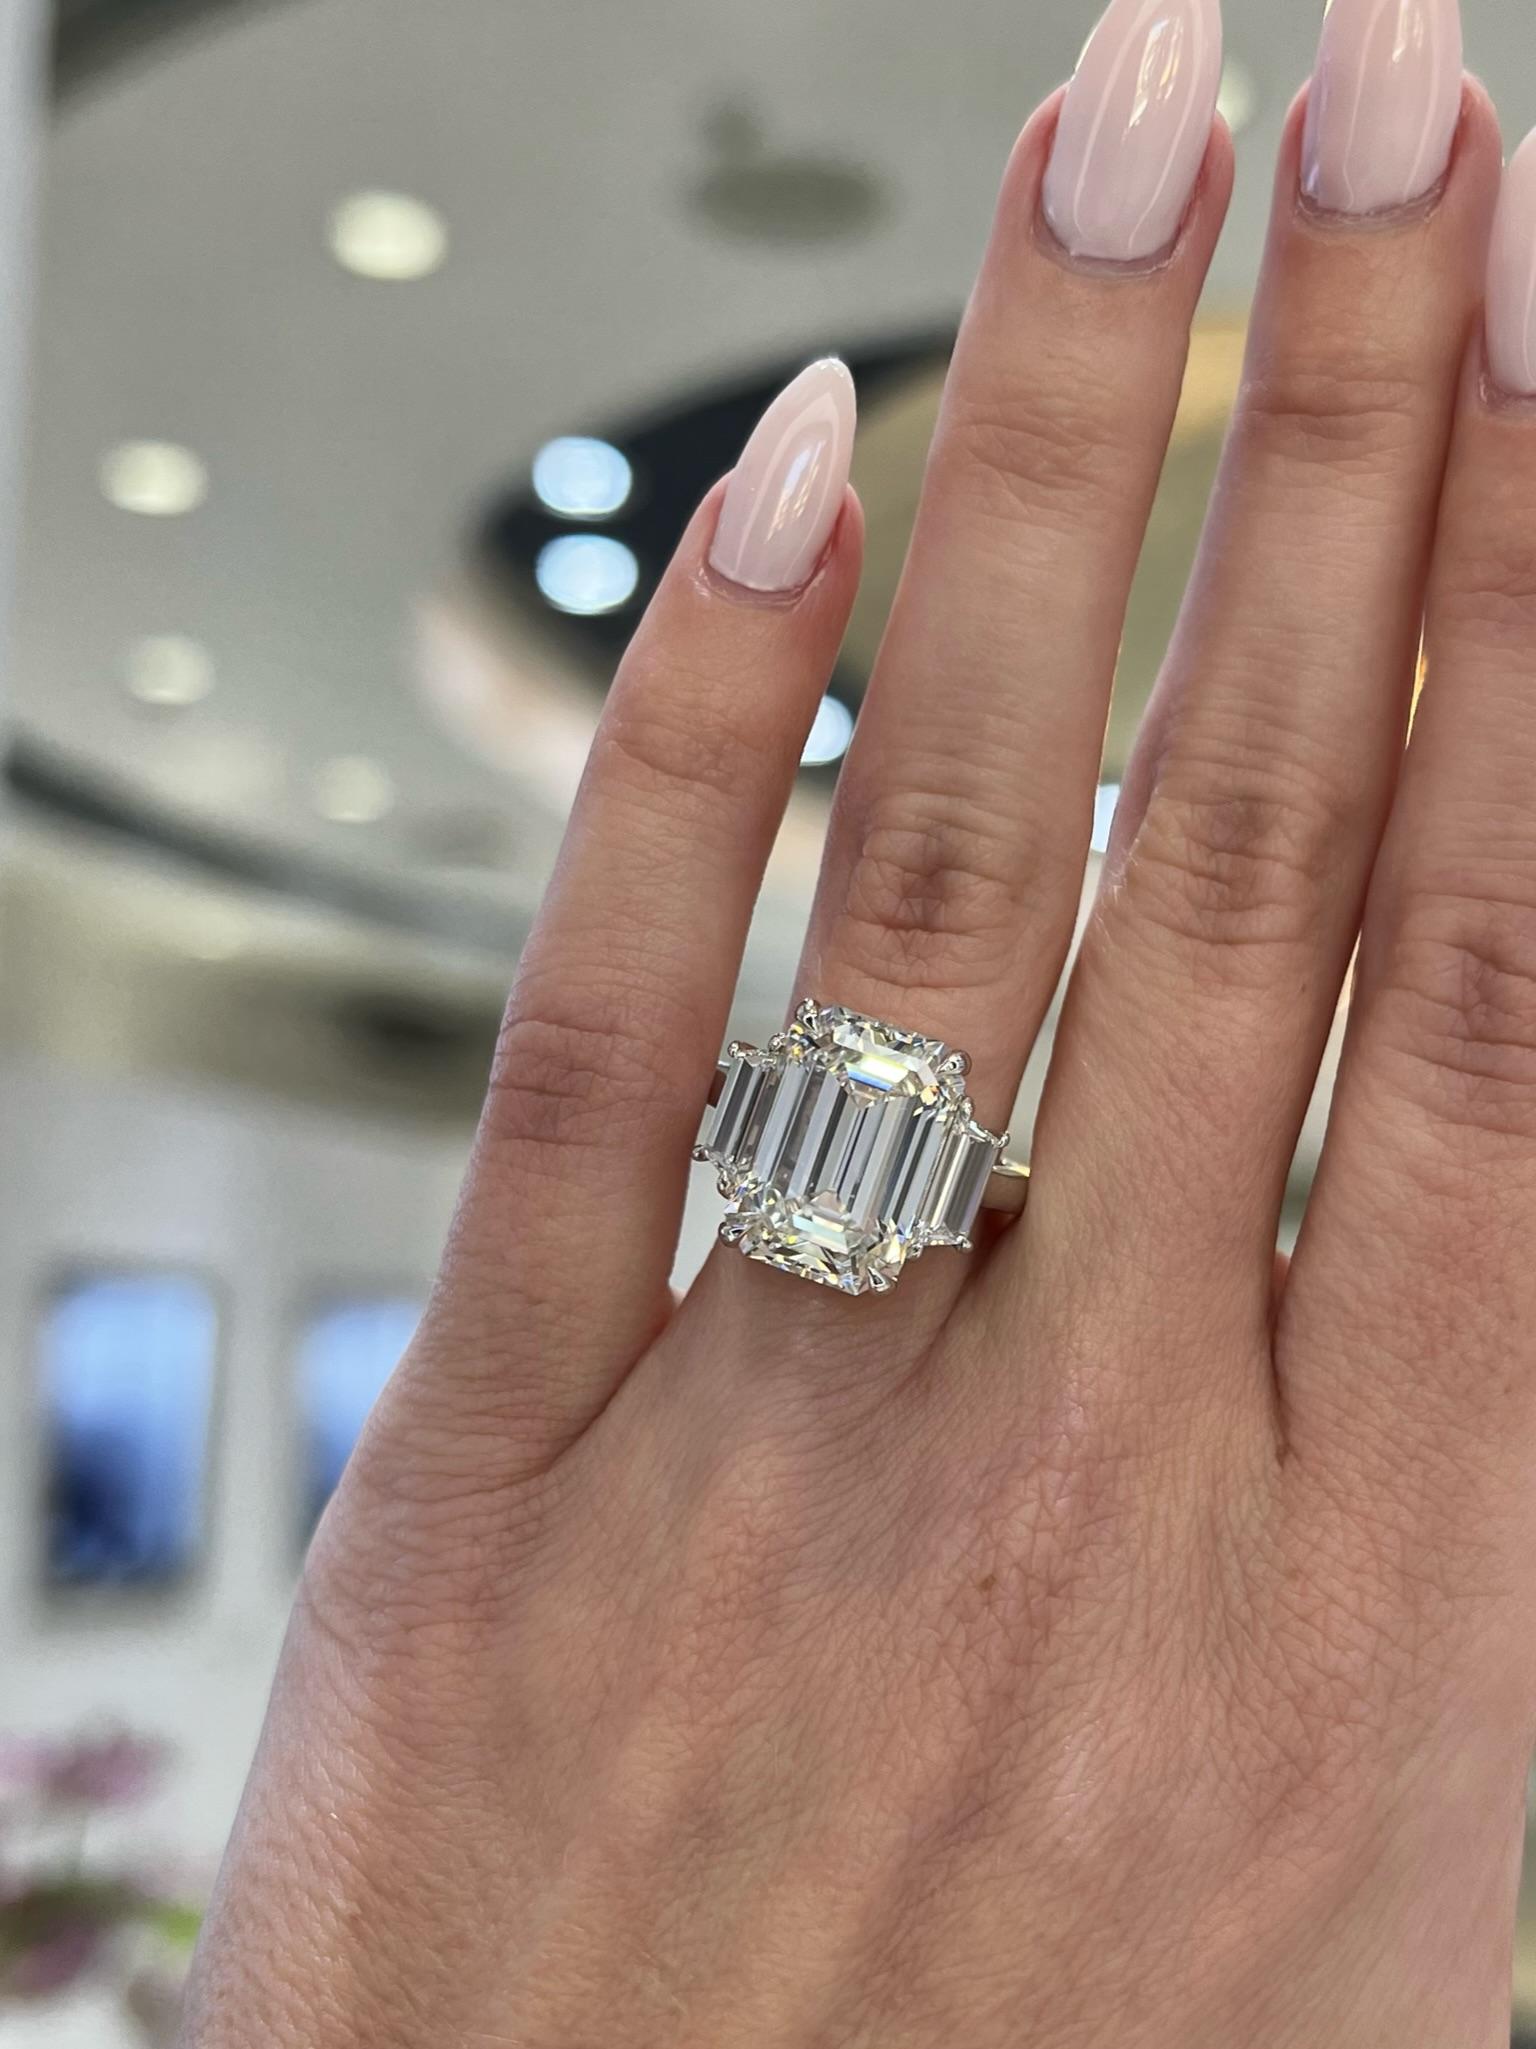 David Rosenberg 8.37 Carat Emerald Cut GIA Three Stone Diamond Engagement Ring For Sale 5